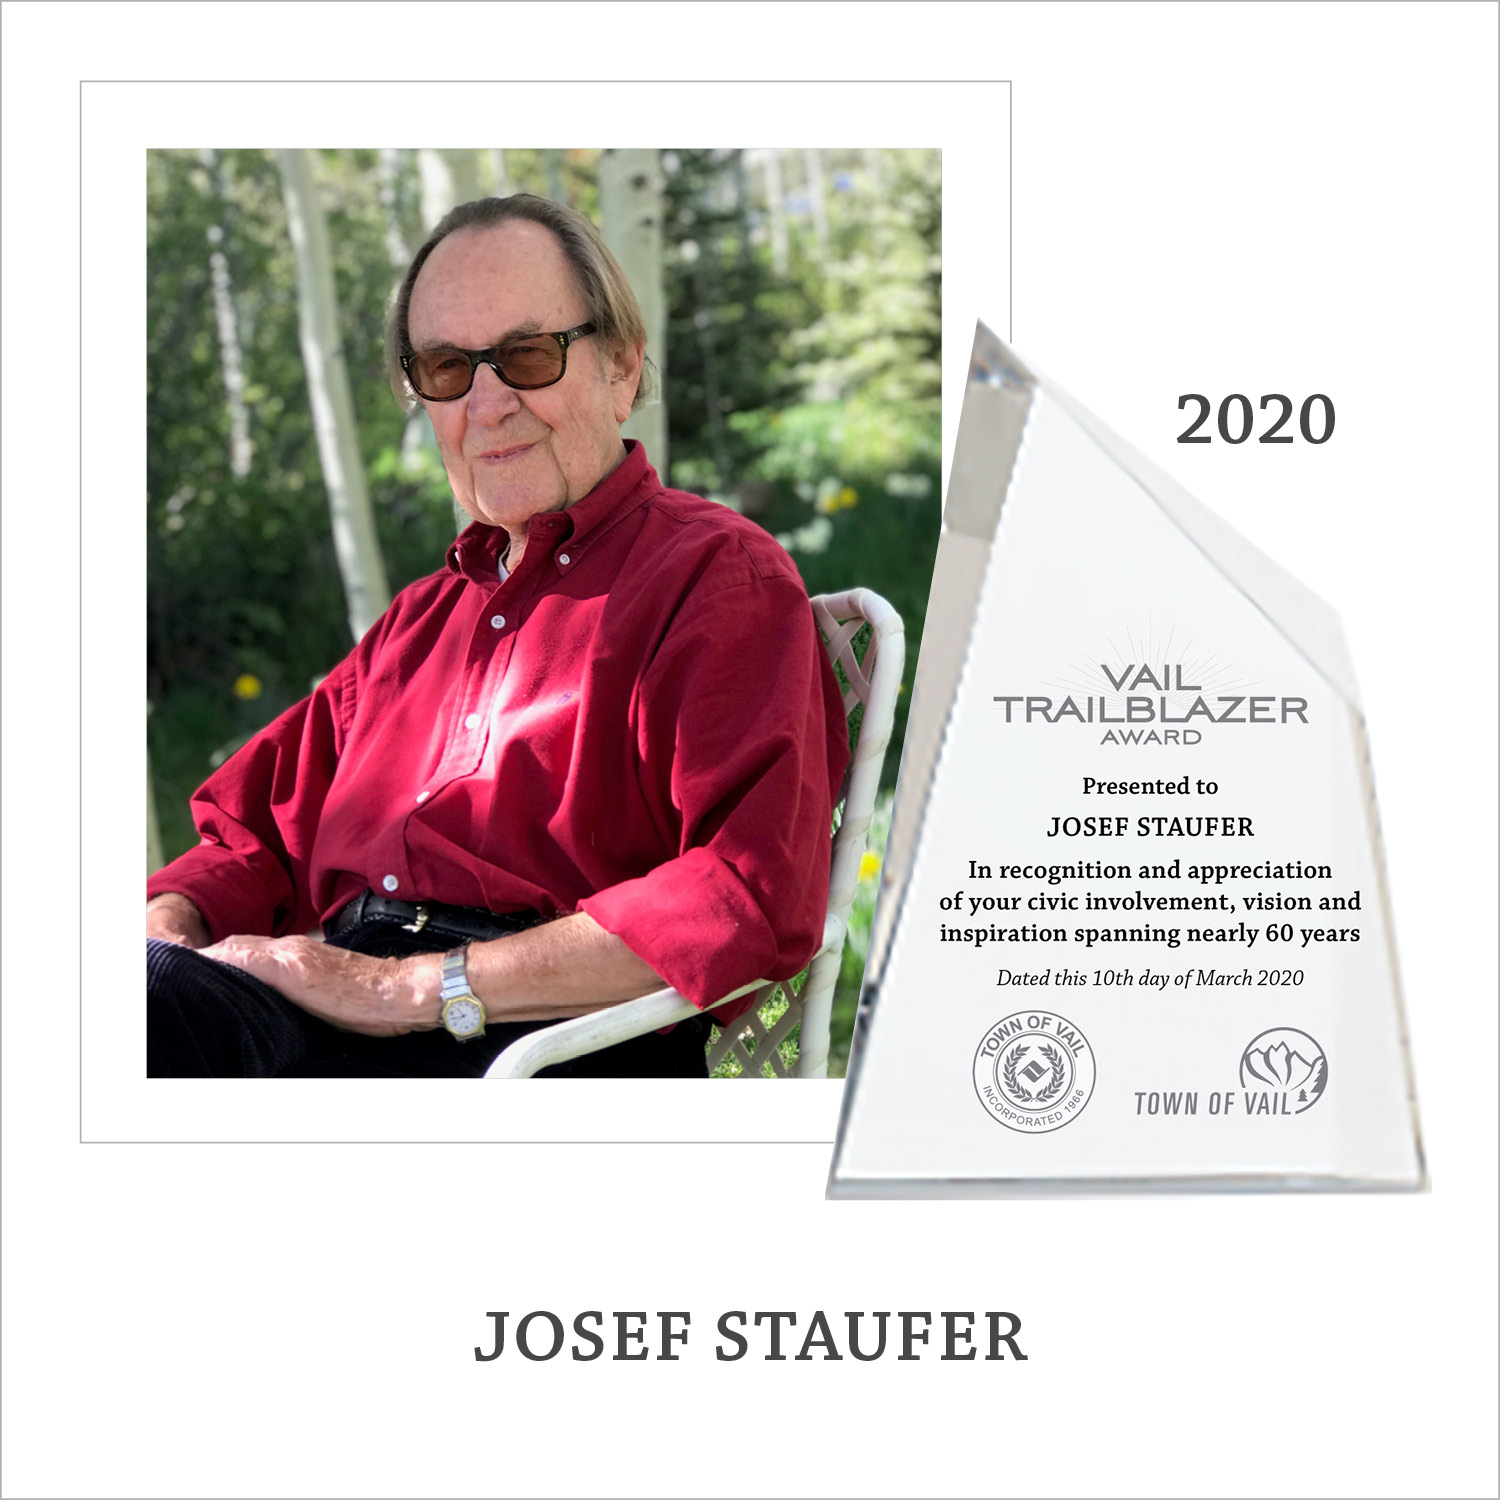 Josef Staufer